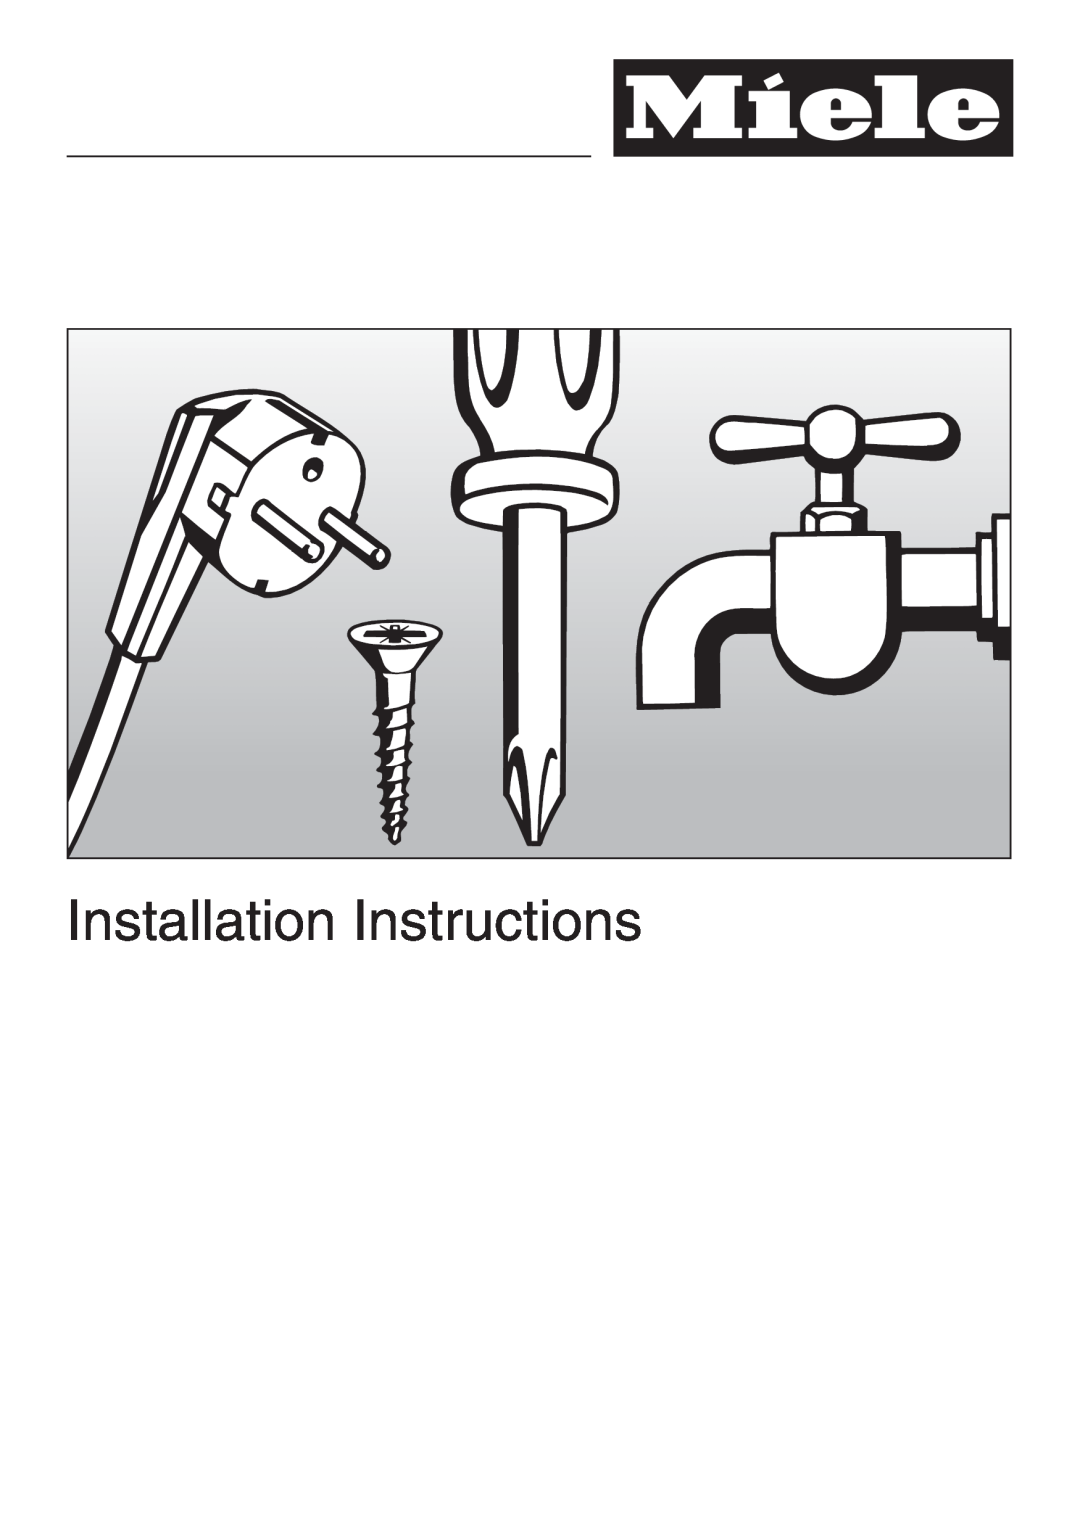 Miele DA252-3, DA259-3, DA 251 installation instructions Installation Instructions 